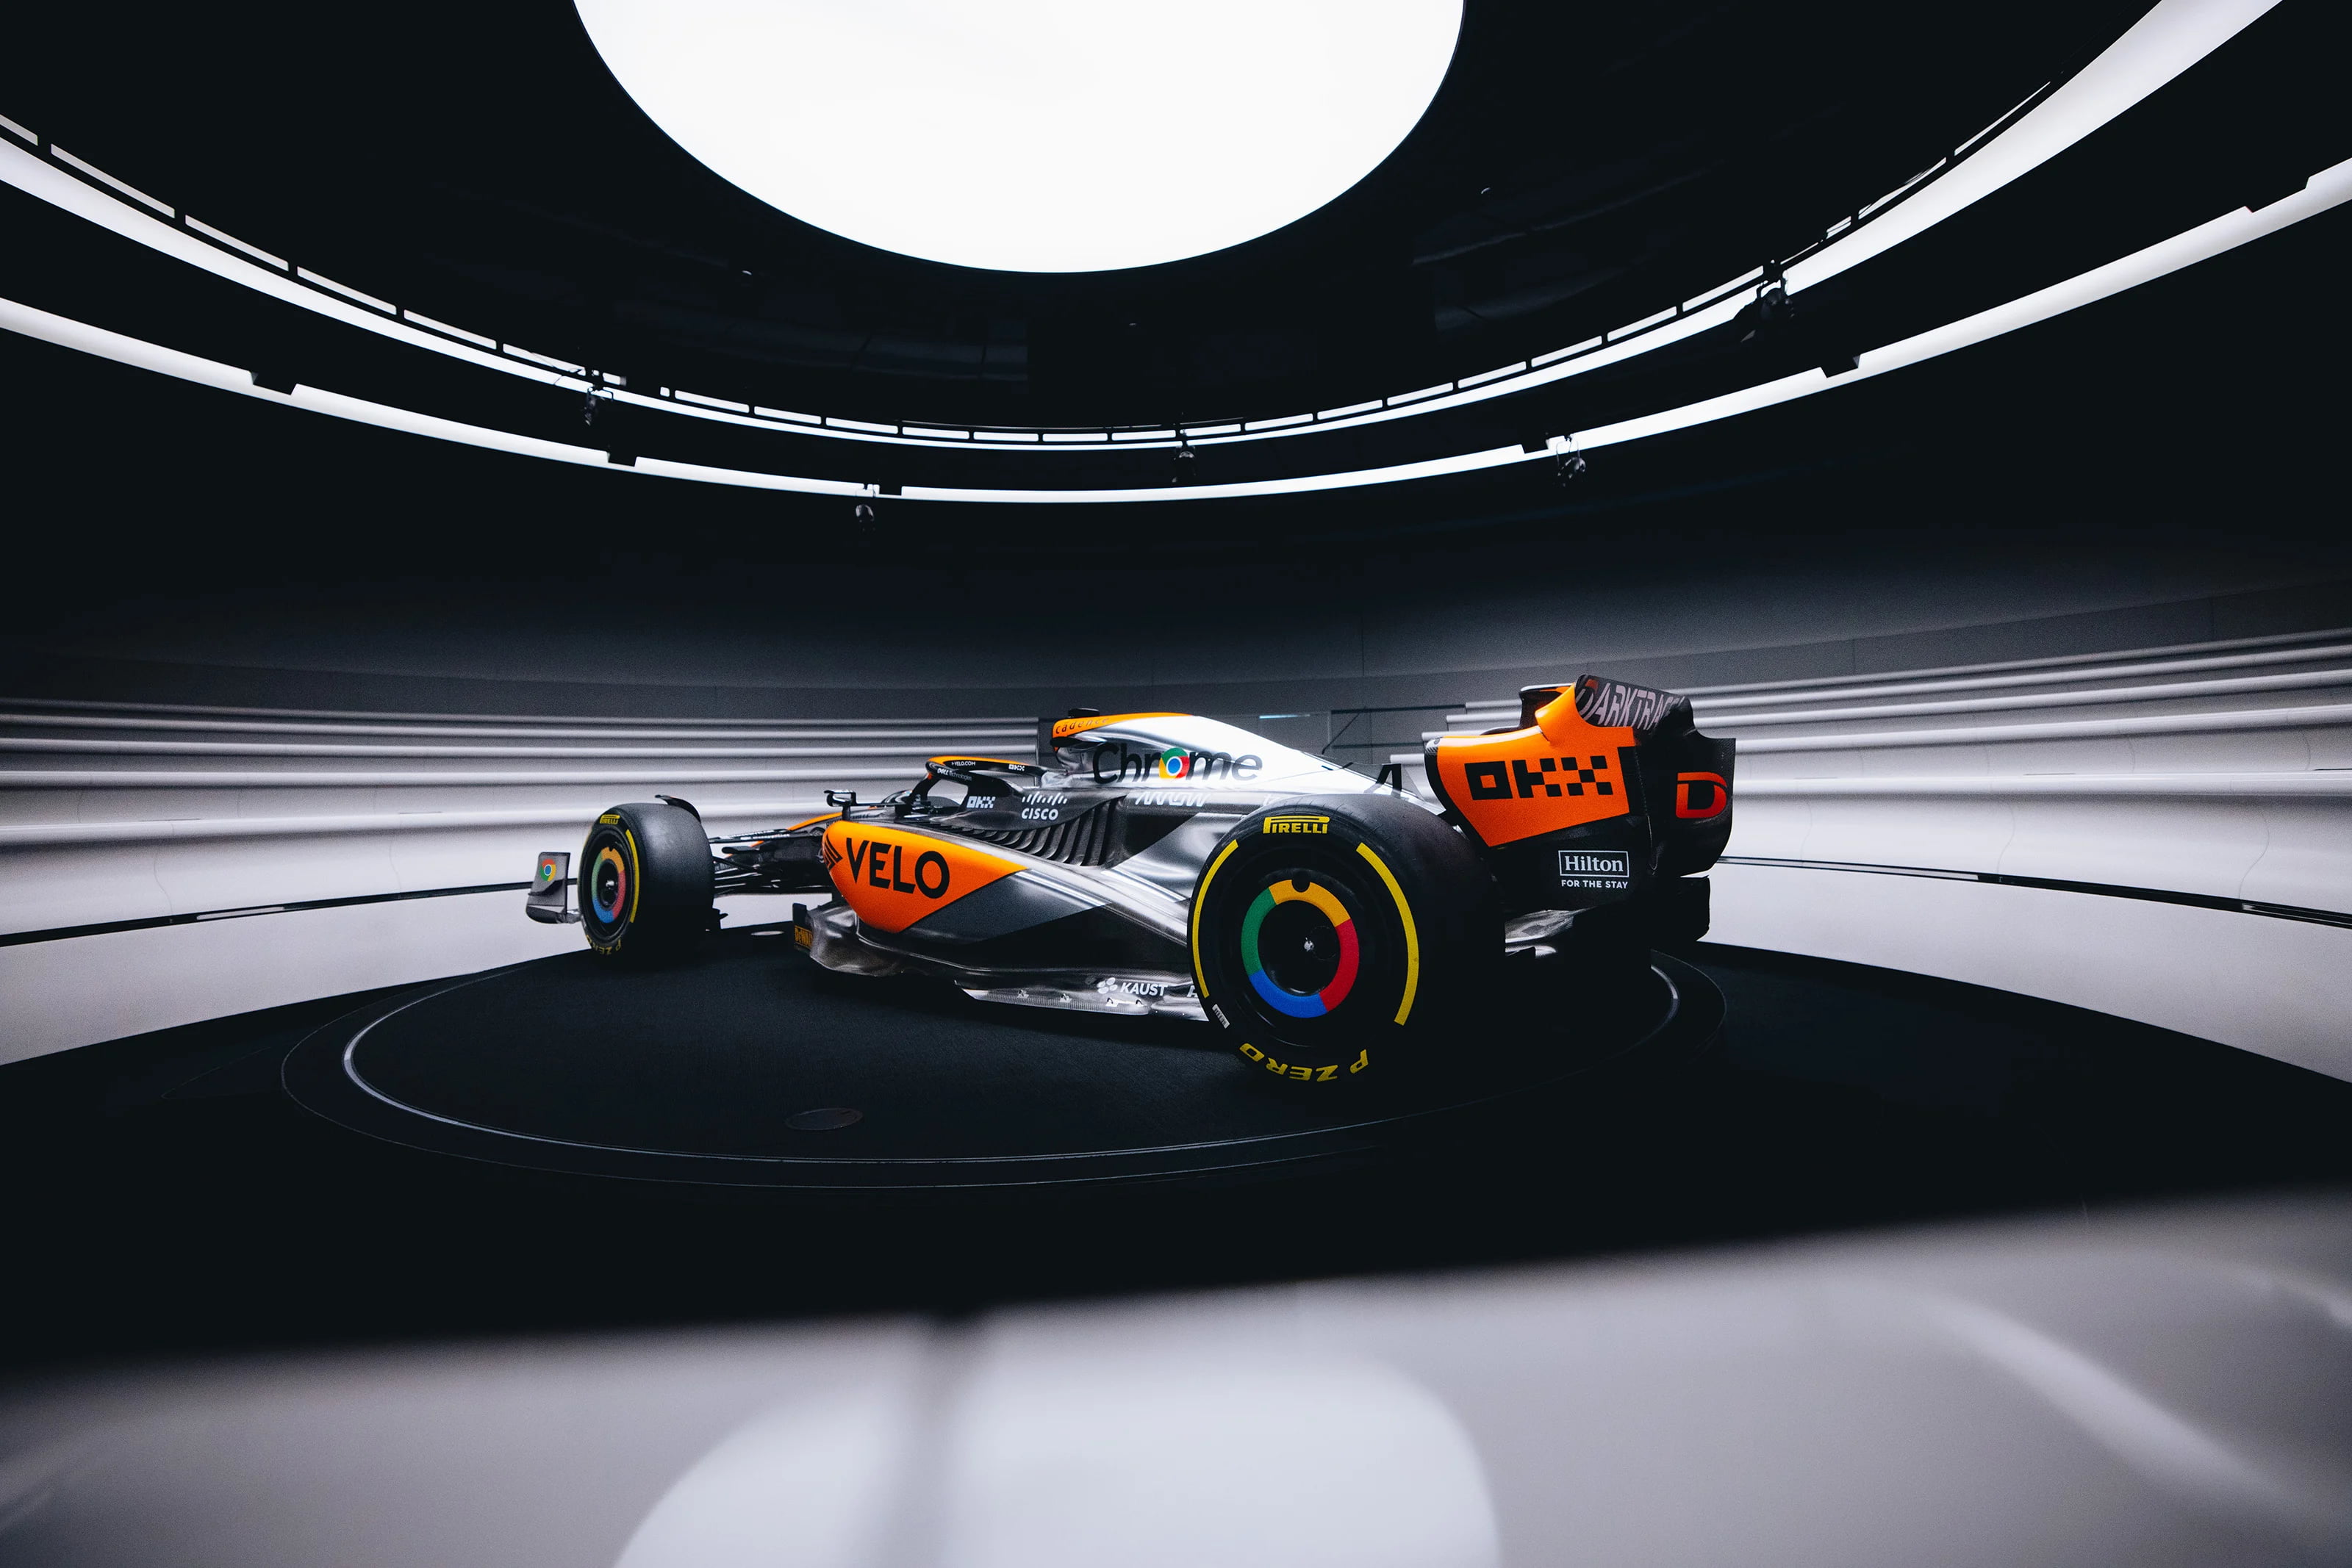 Formula 1, McLaren F1, race cars, Lando Norris